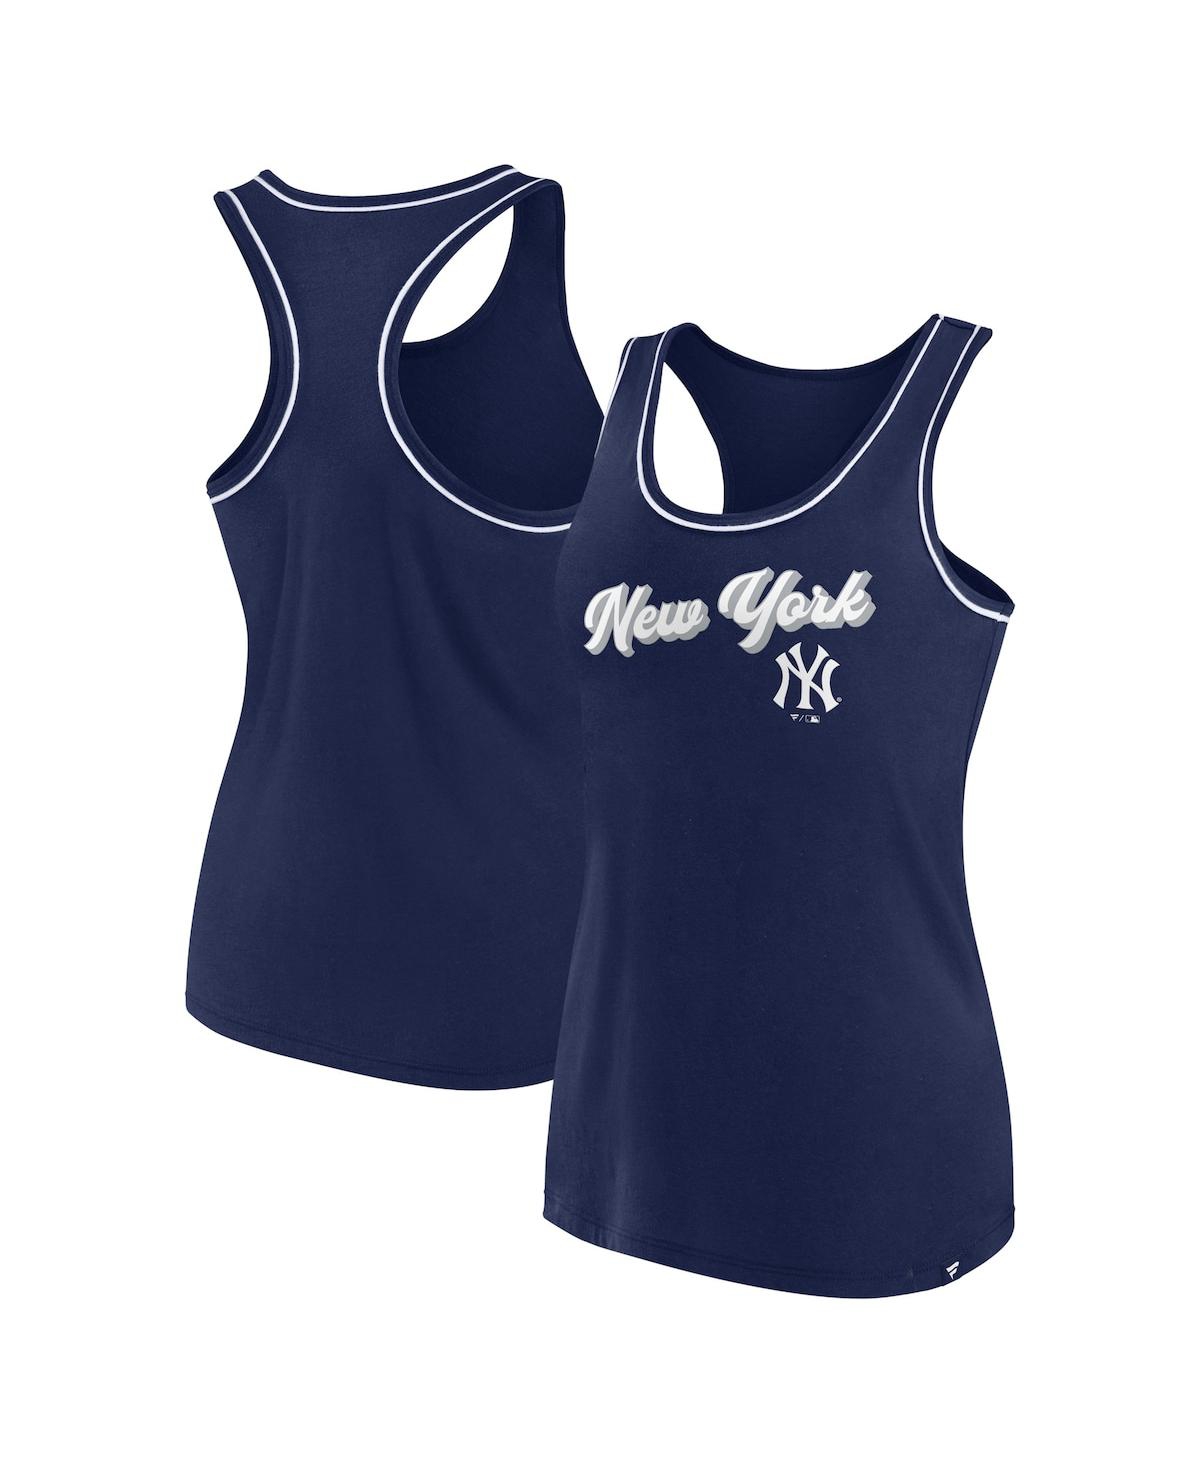 Shop Fanatics Women's  Navy New York Yankees Wordmark Logo Racerback Tank Top